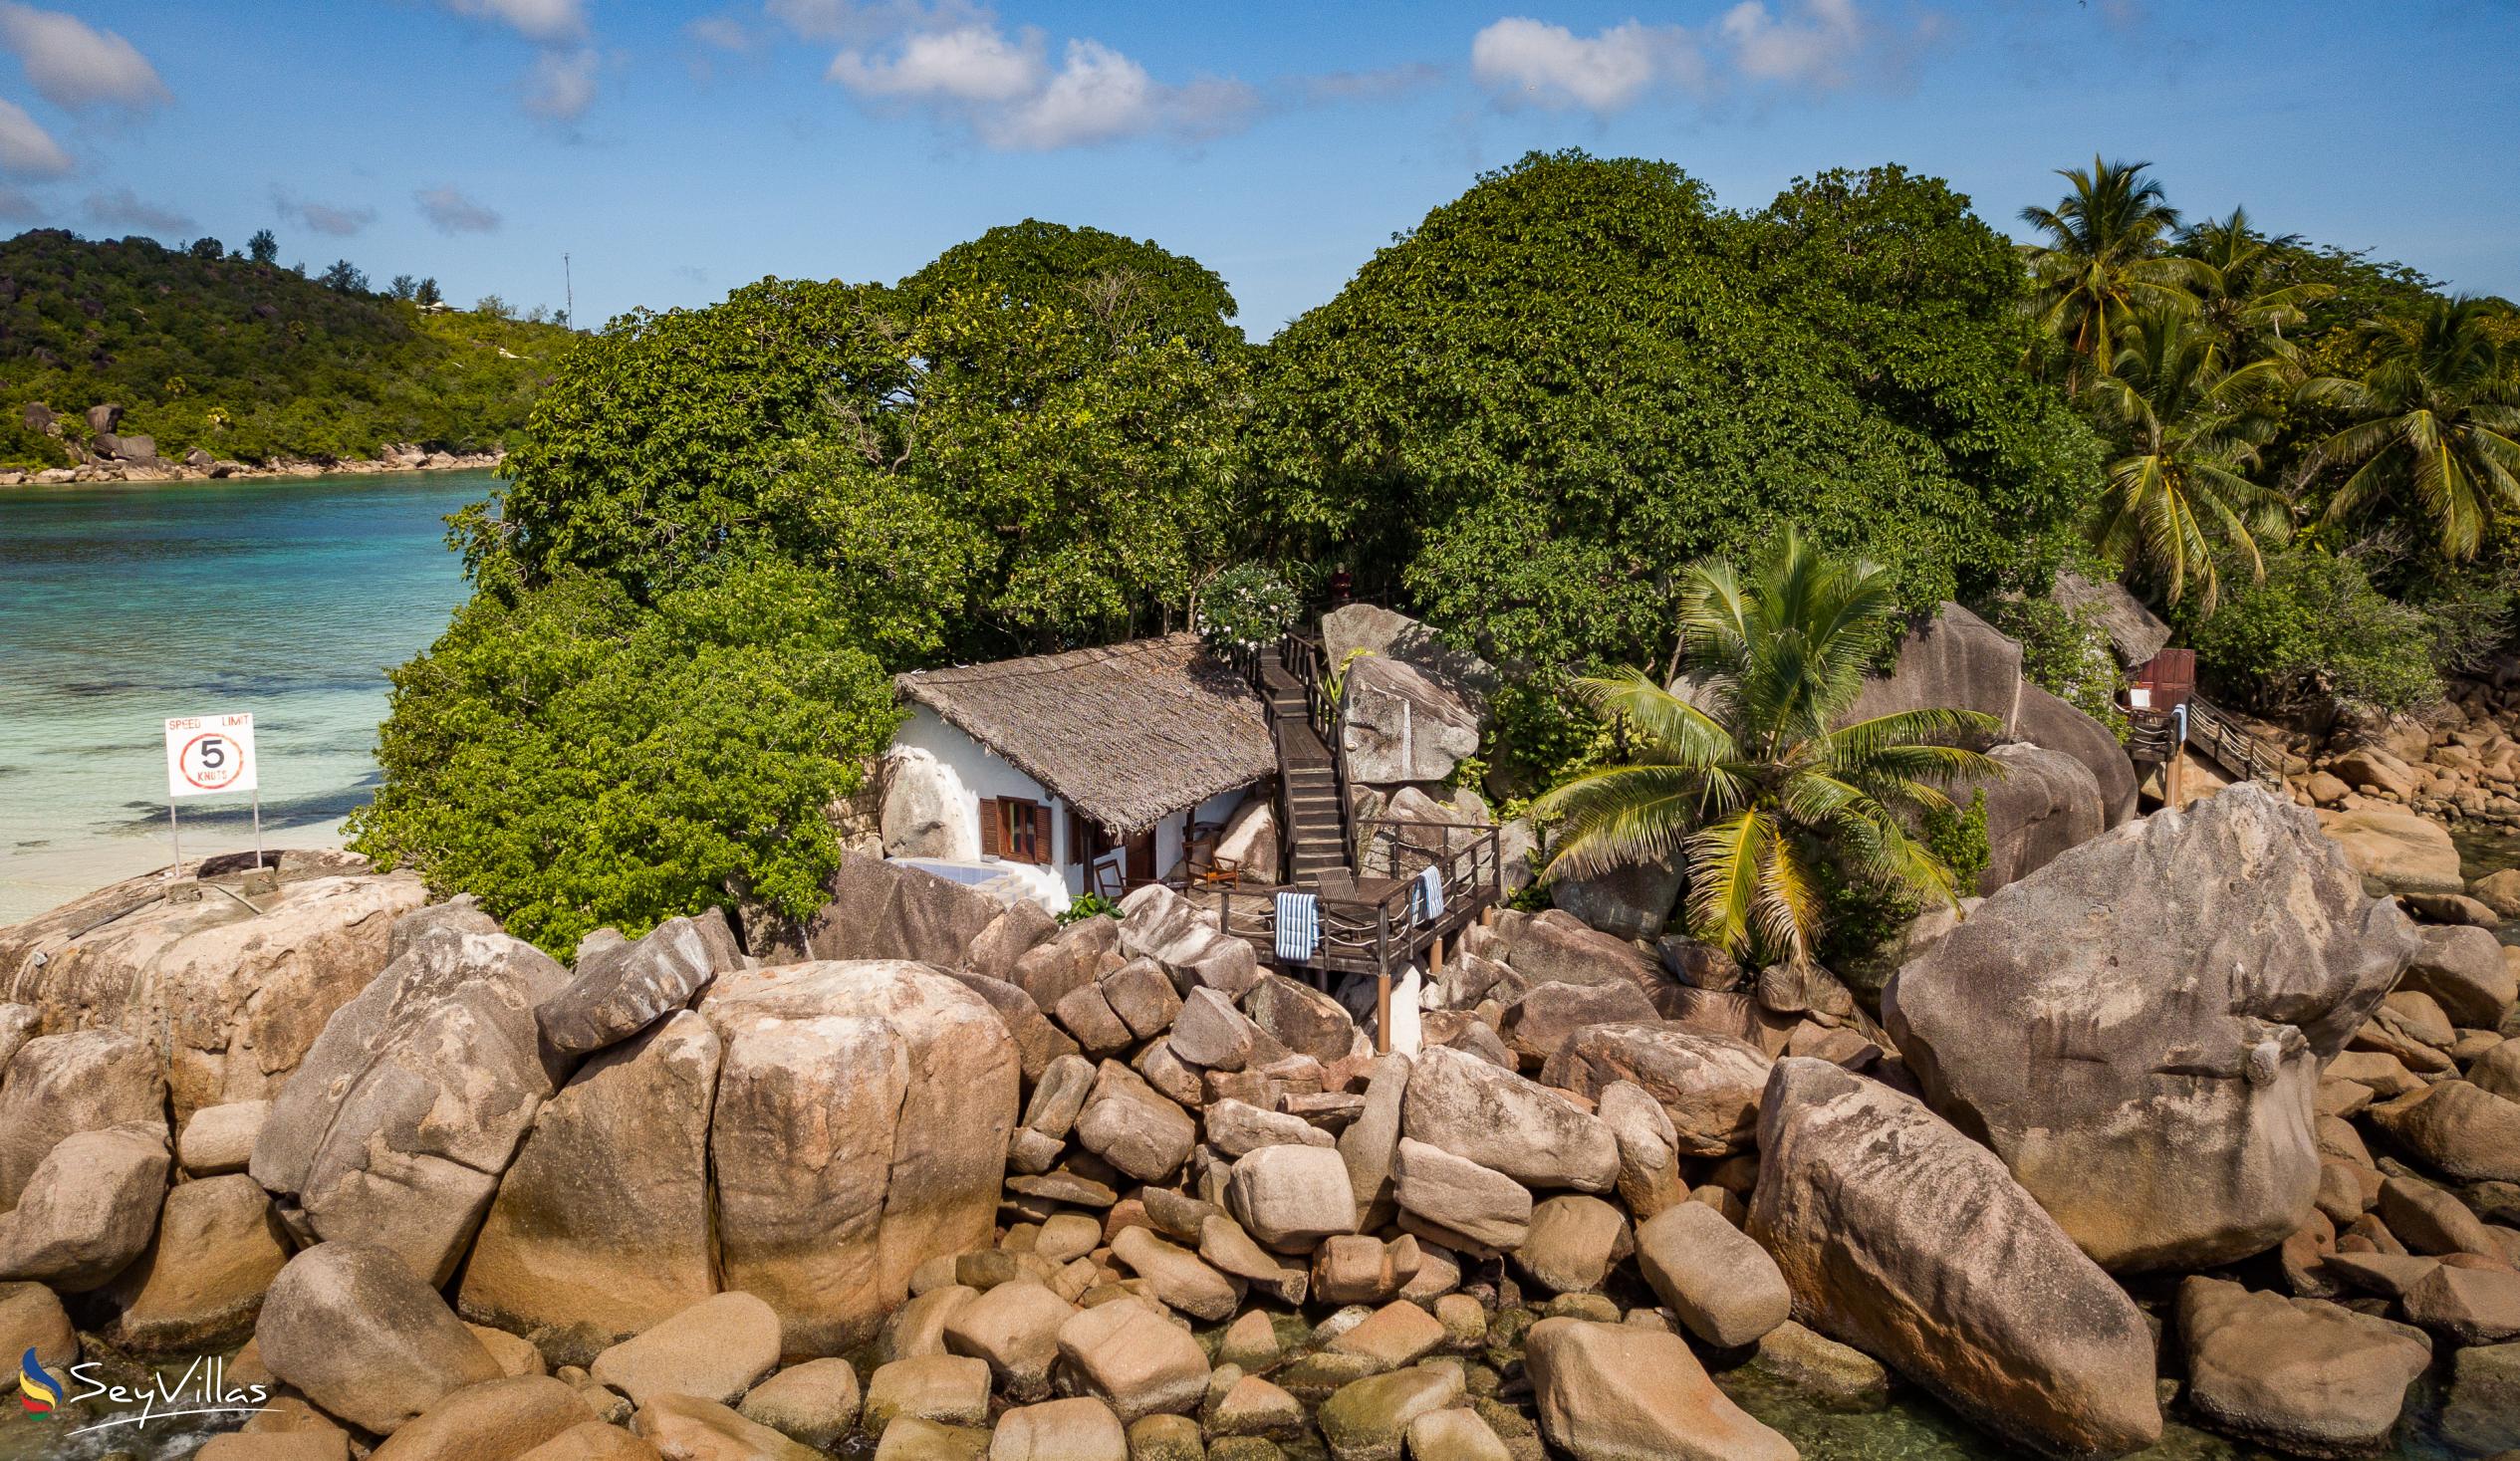 Photo 2: Chauve Souris Relais - Outdoor area - Praslin (Seychelles)